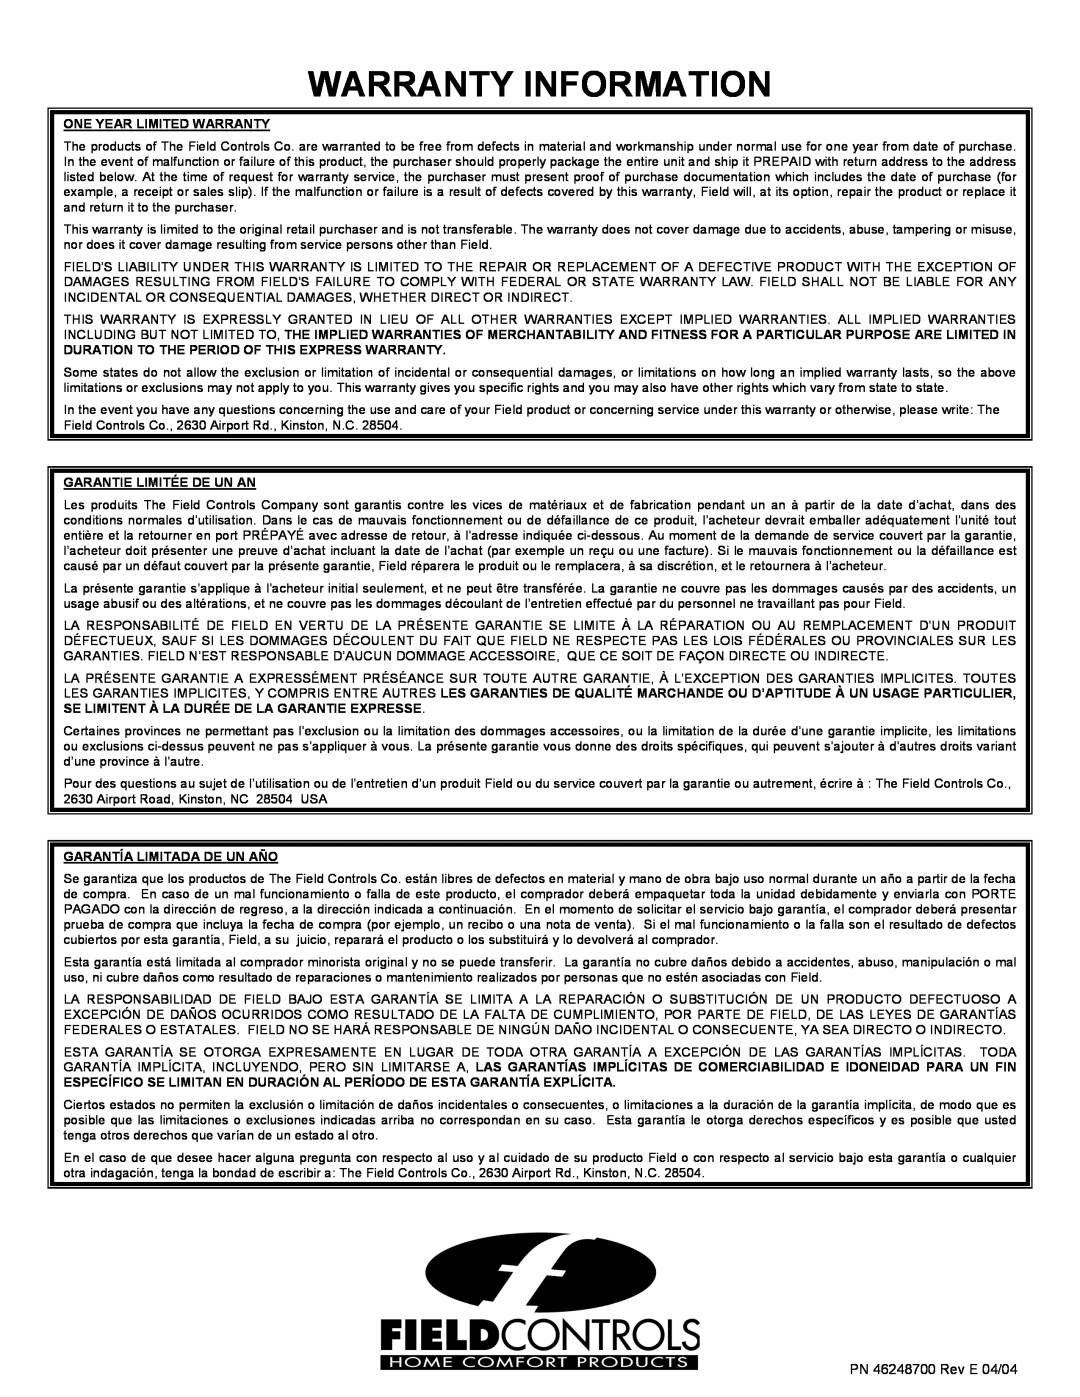 Field Controls TB-1 manual Warranty Information, Page PN 46248700 Rev E 04/04, One Year Limited Warranty 